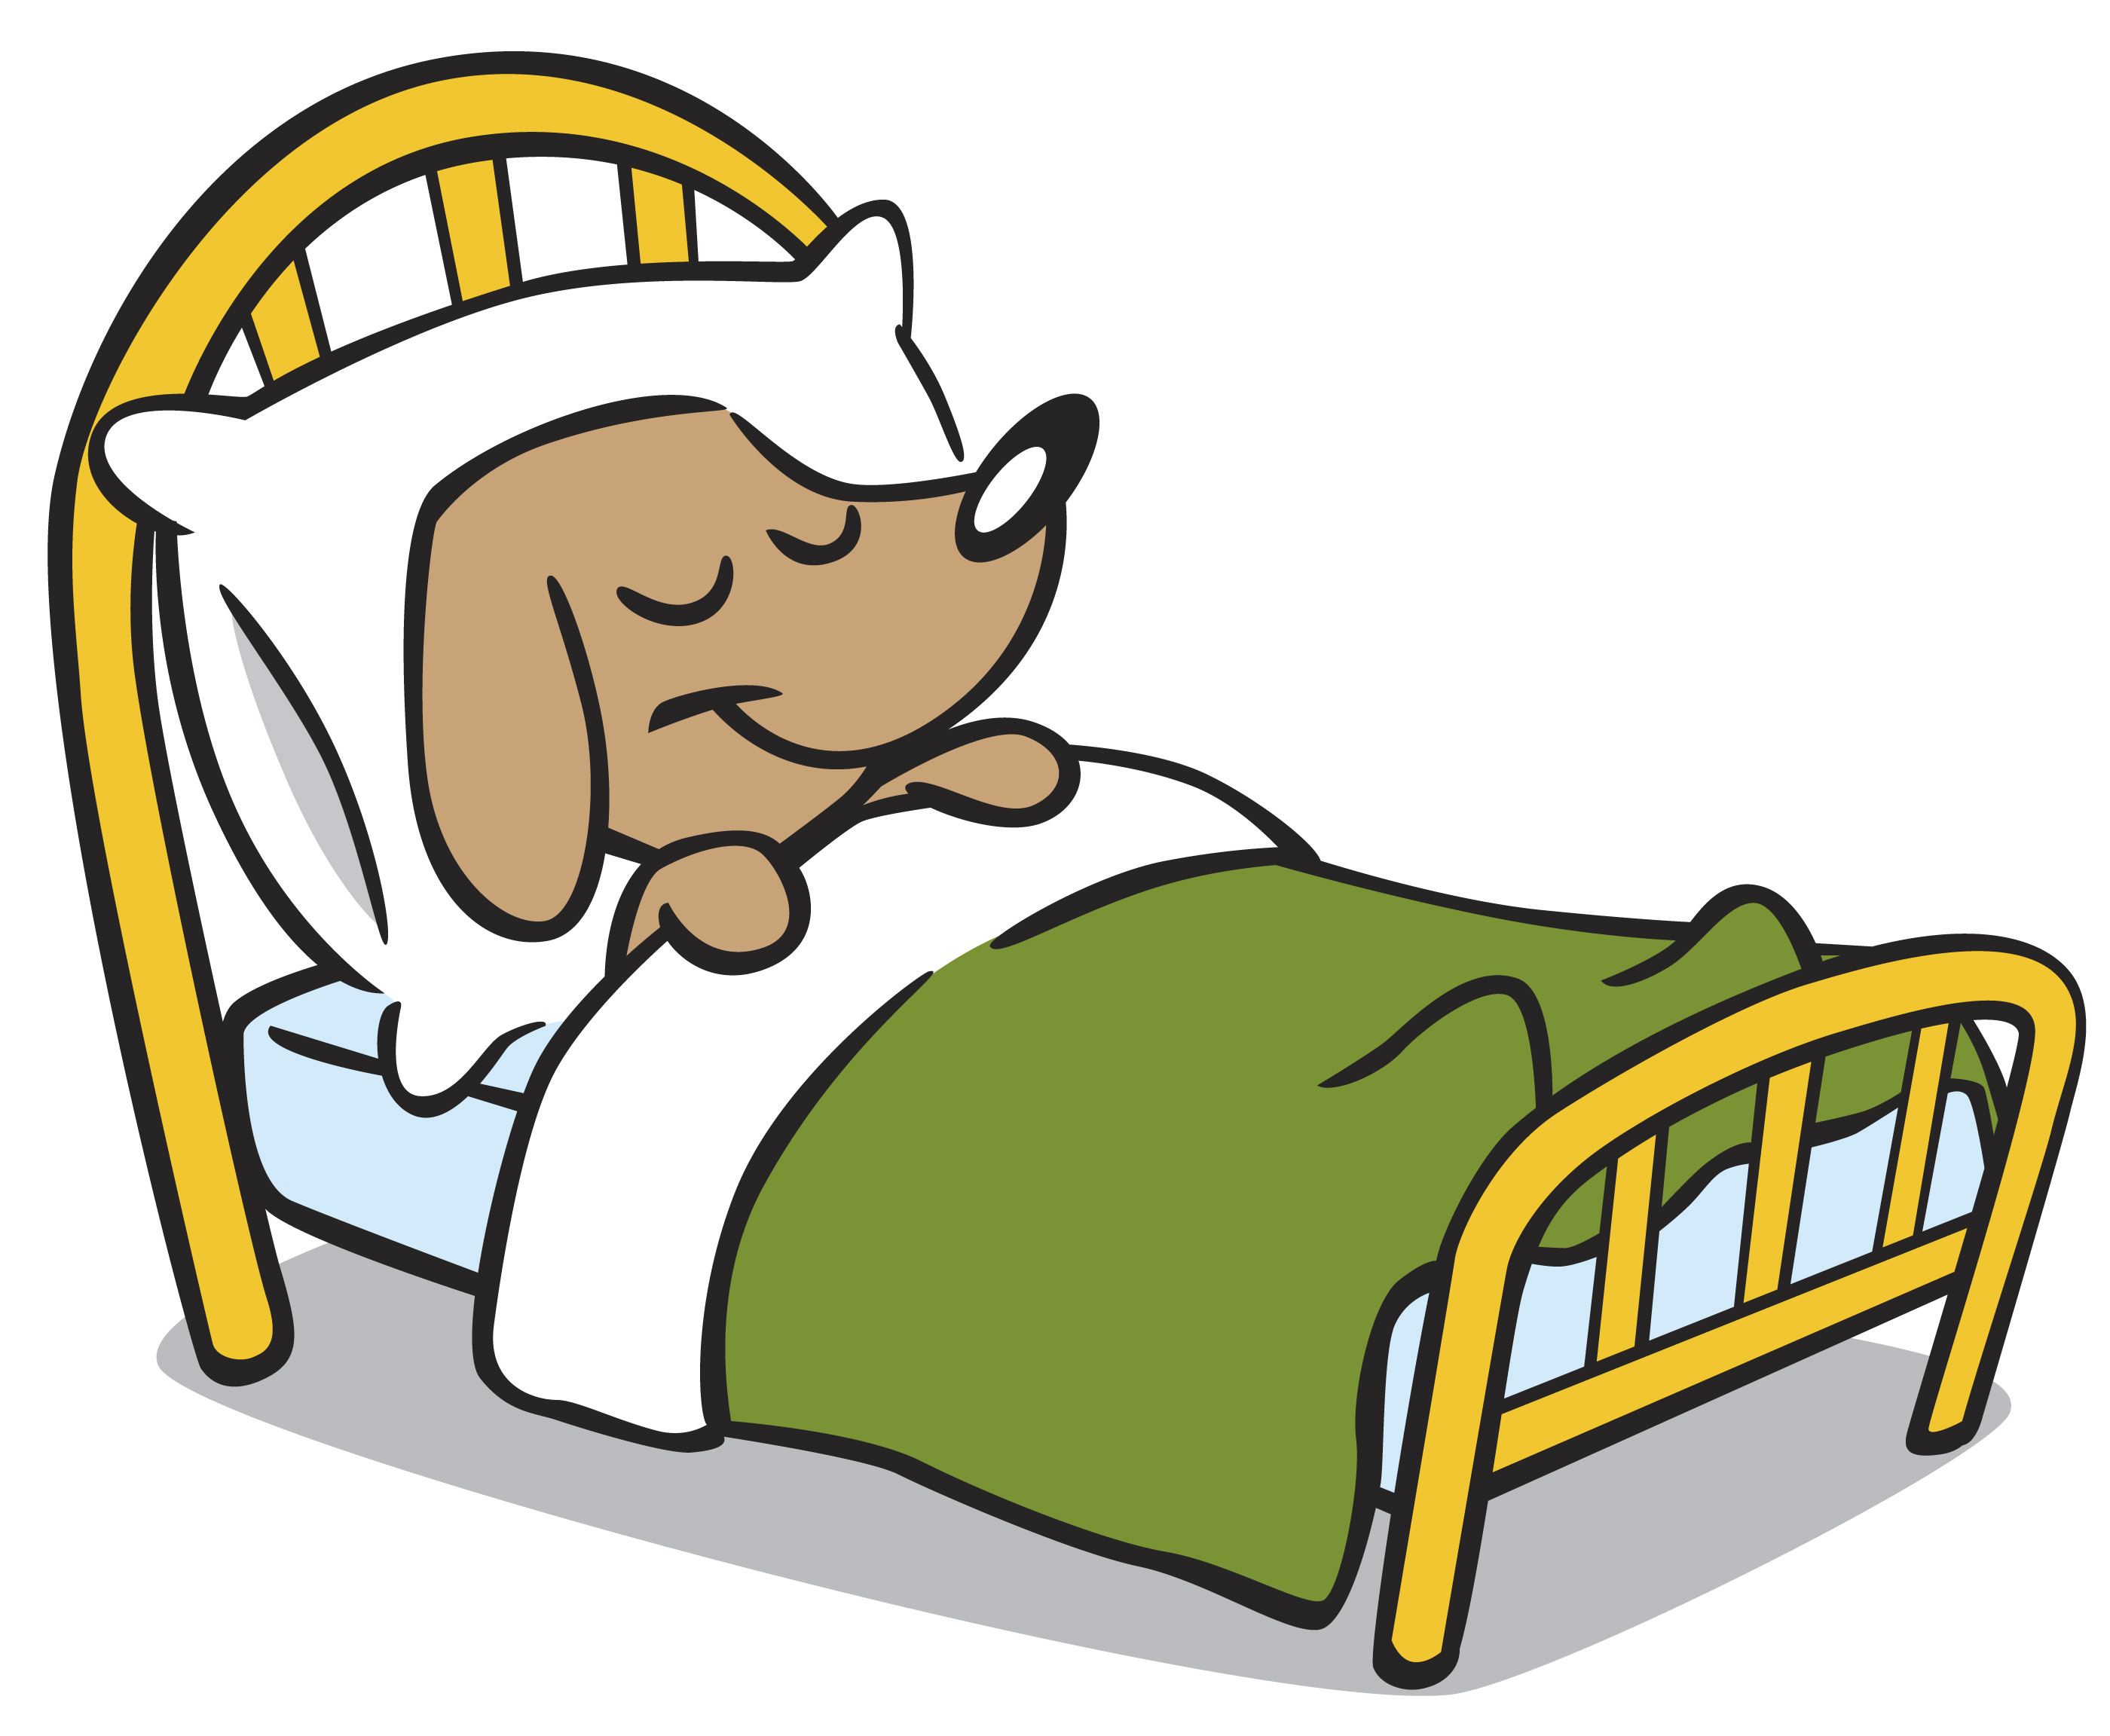 Clip art dog bed clipart clipart kid - Cliparting.com